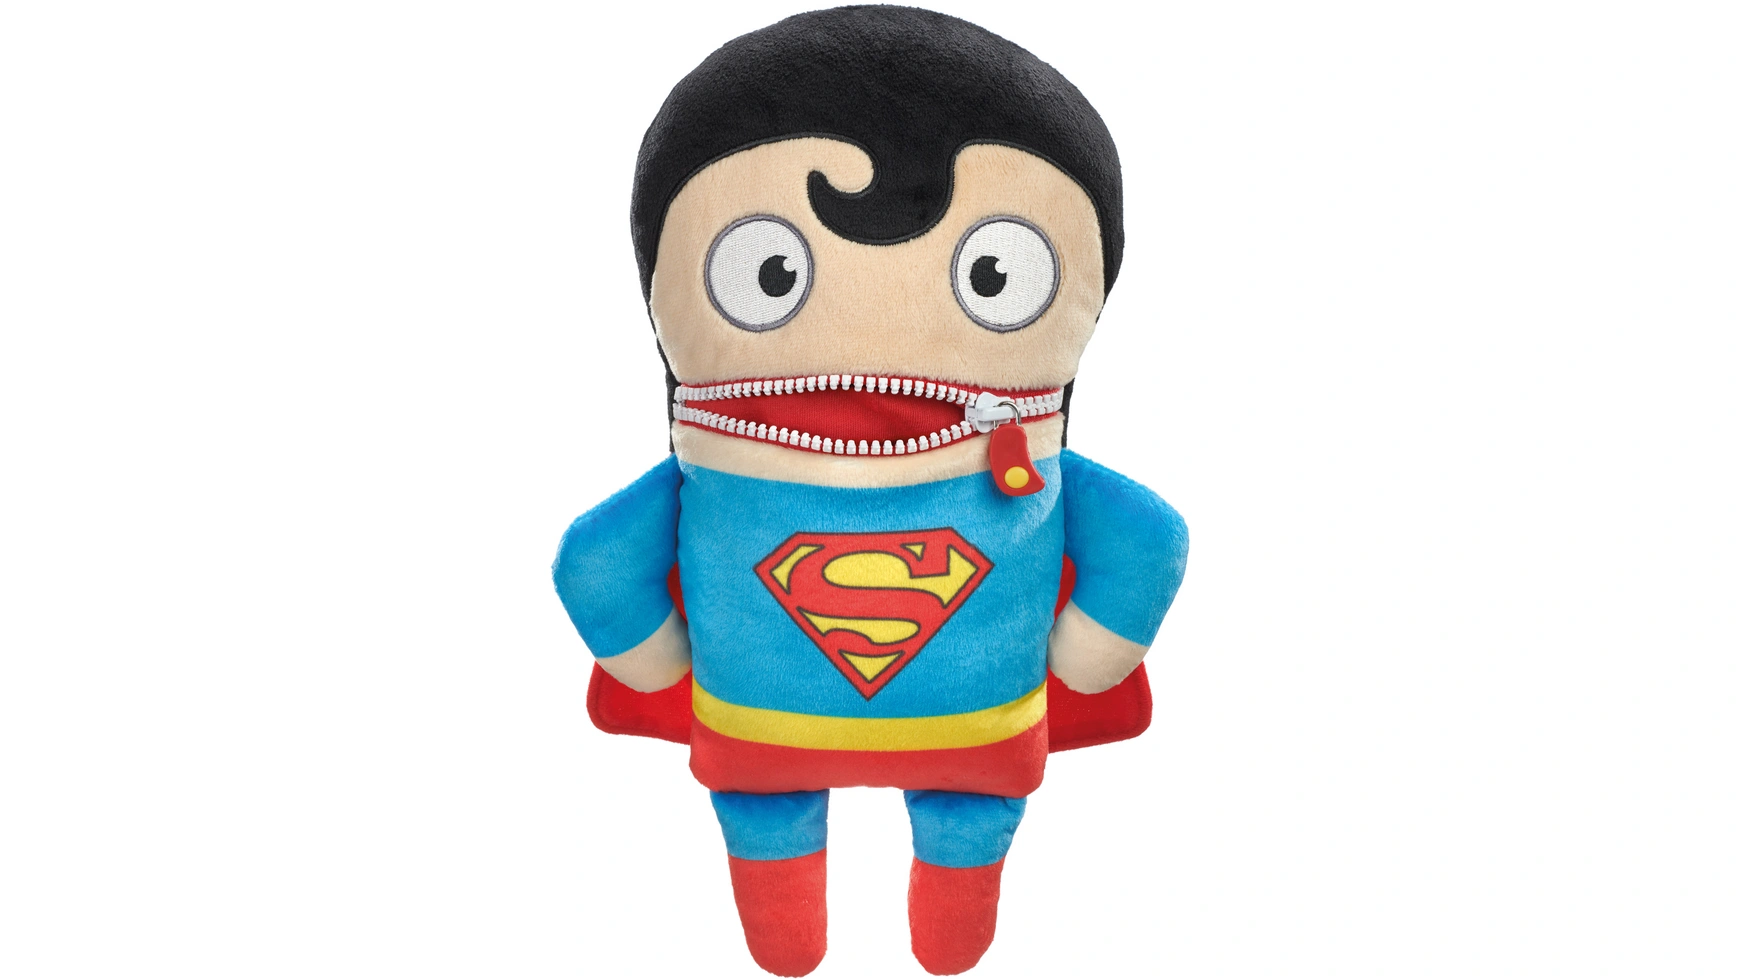 Schmidt Spiele Worry Eater DC Super Hero: Worry Eater, Супермен, 29 см фигурка bendyfig dc супермен